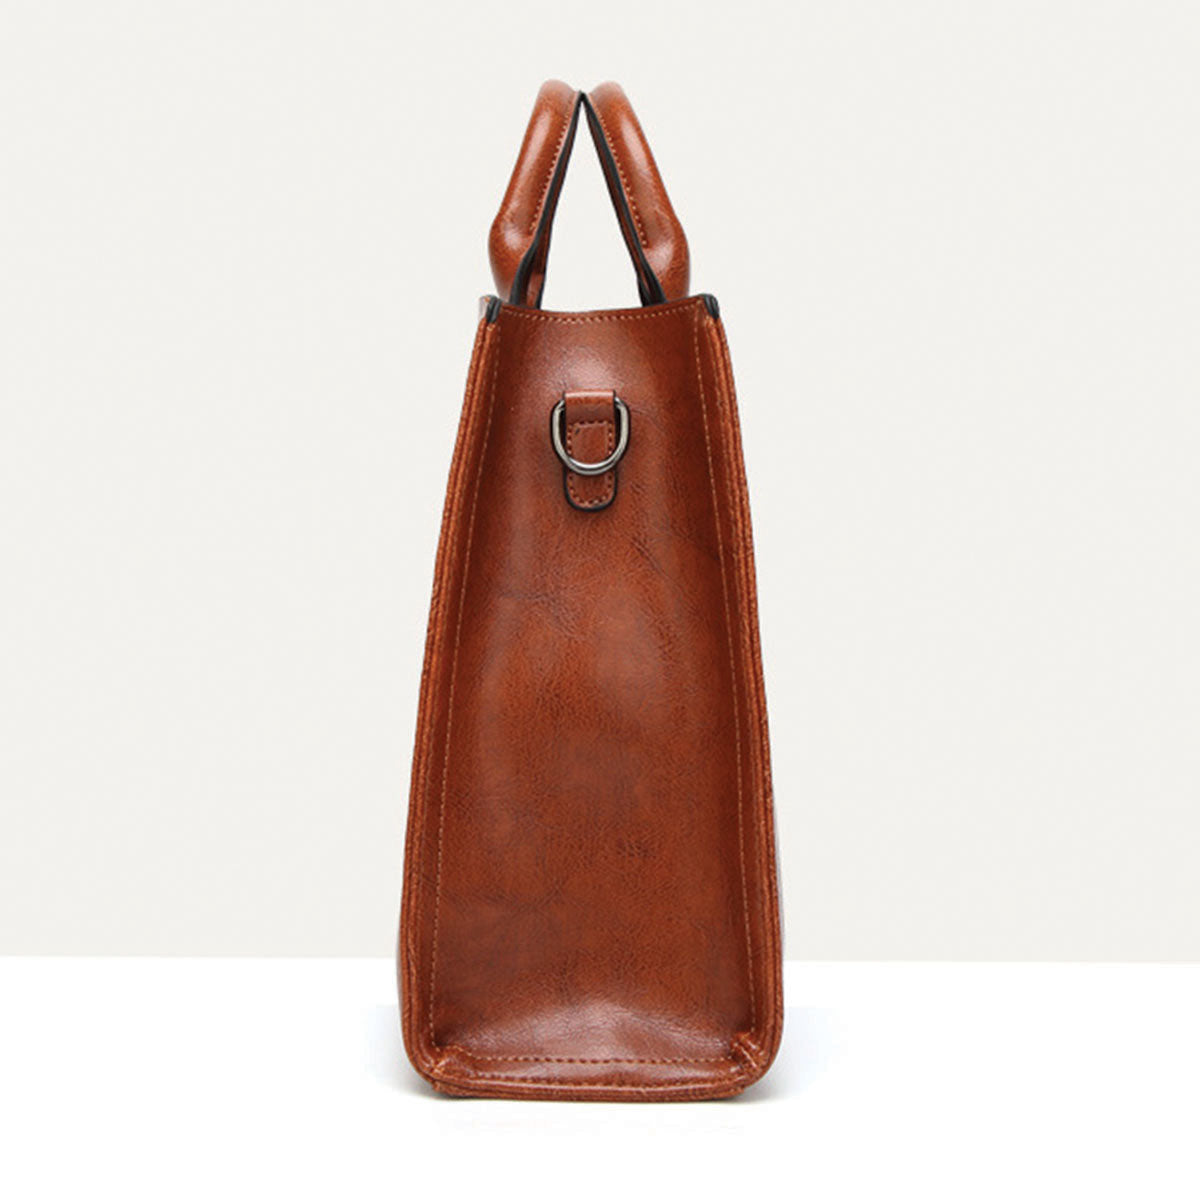 Your Best Companion - Brittany Spaniel Luxury Handbag V1